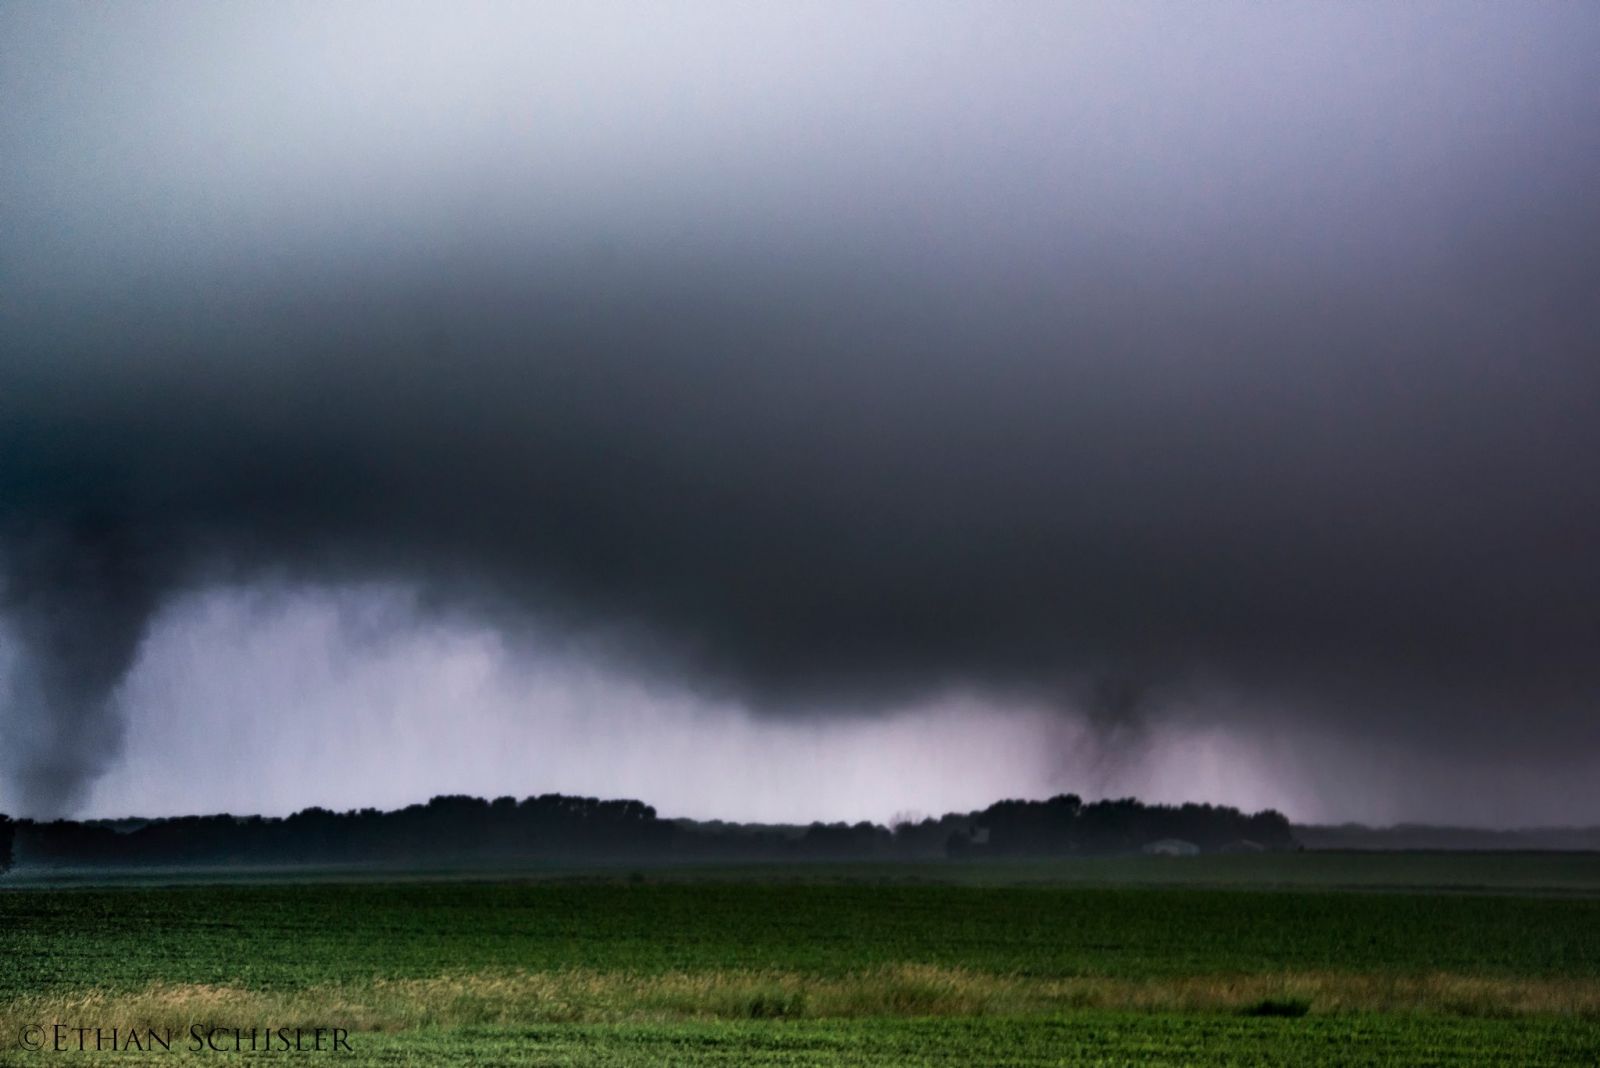 Tornado photo by Ethan Schisler